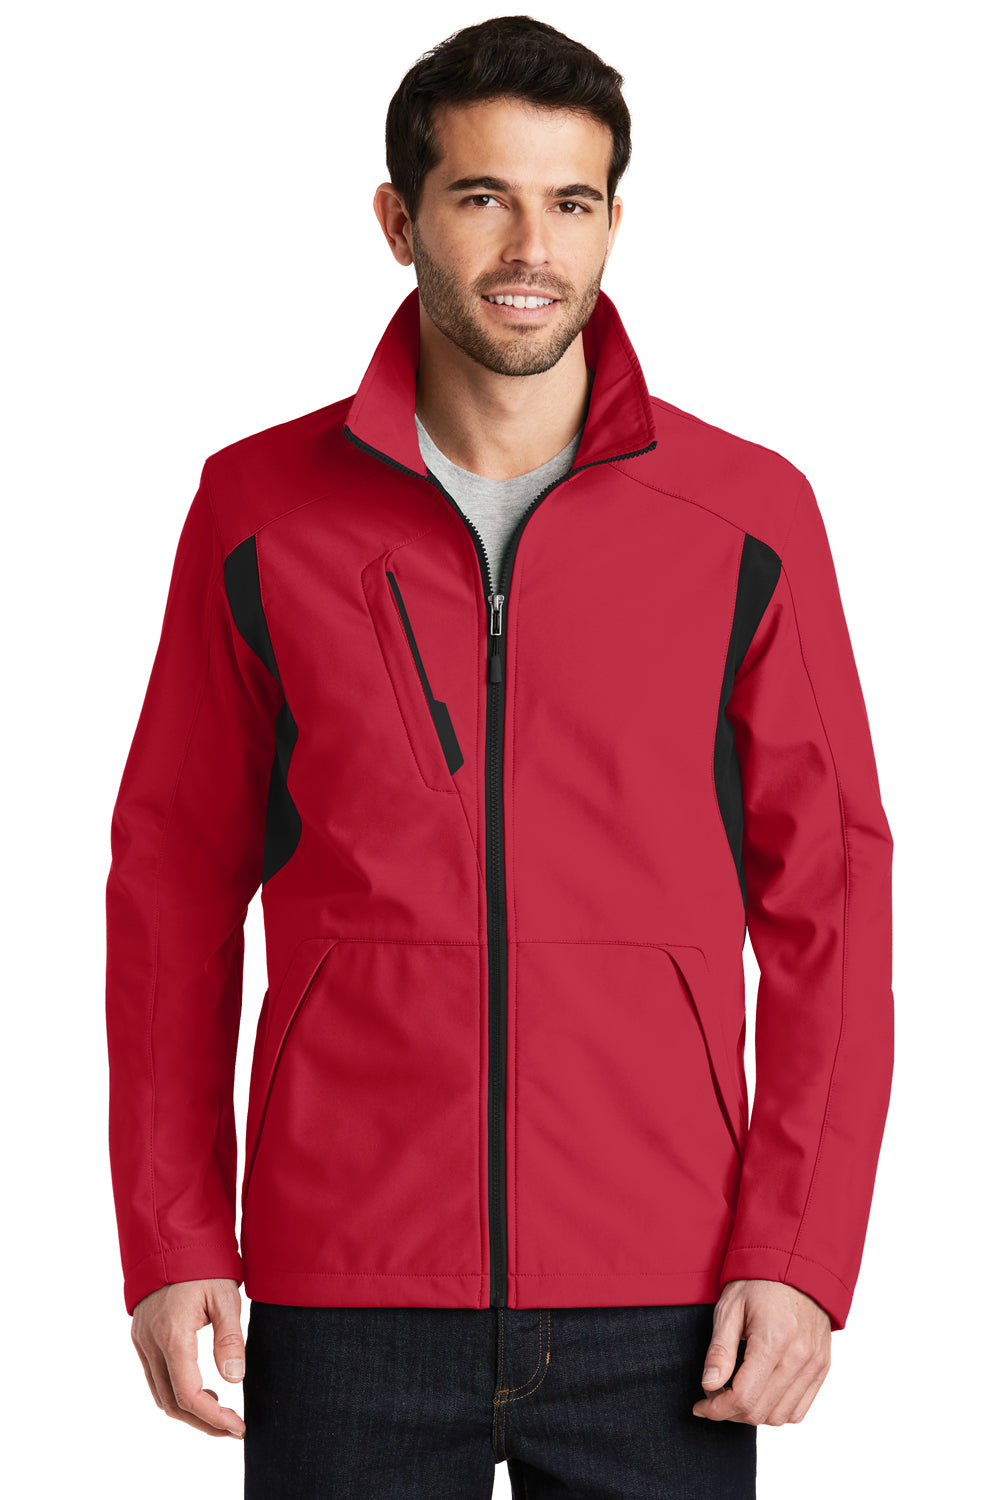 Port Authority J336 Mens Wind & Water Resistant Full Zip Jacket Red/Black Front